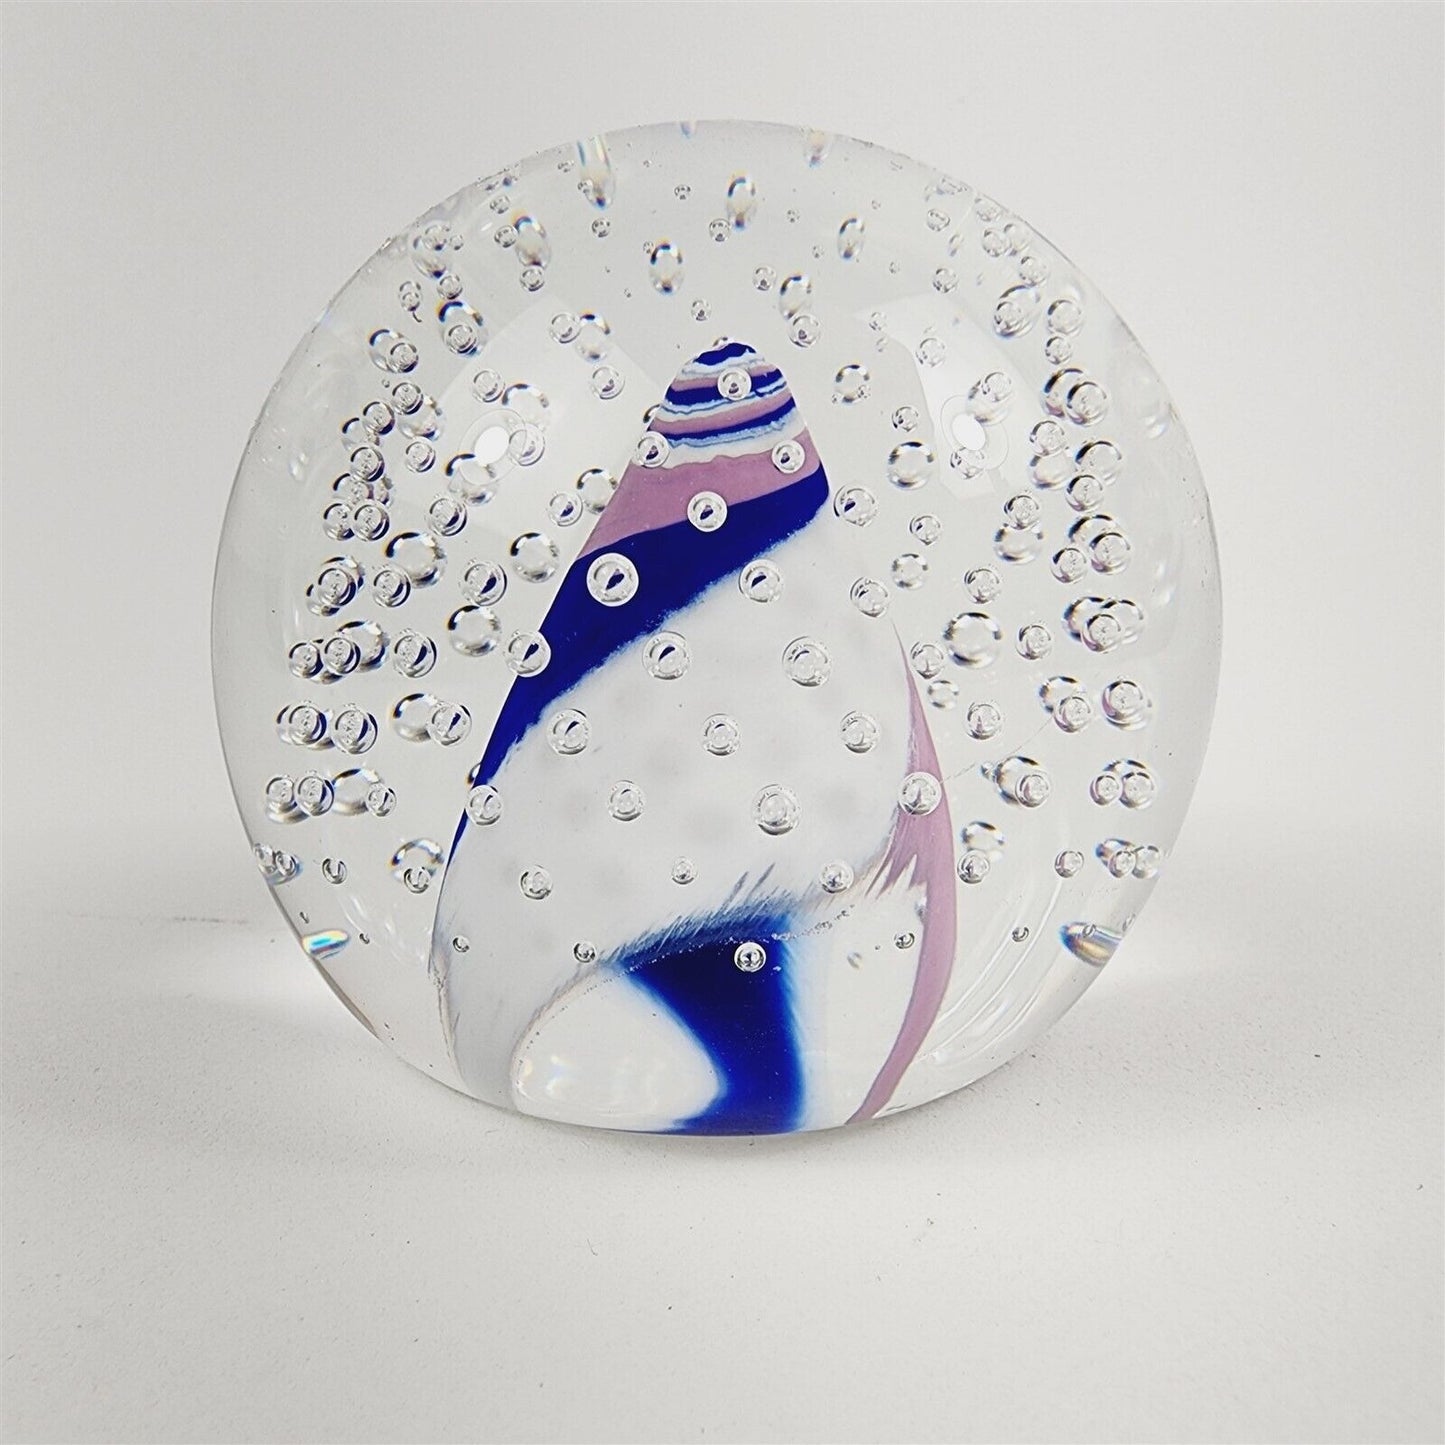 Caithness Glass Paperweight Scotland J18492 "Liberty" Blue Pink White - 3 3/16"